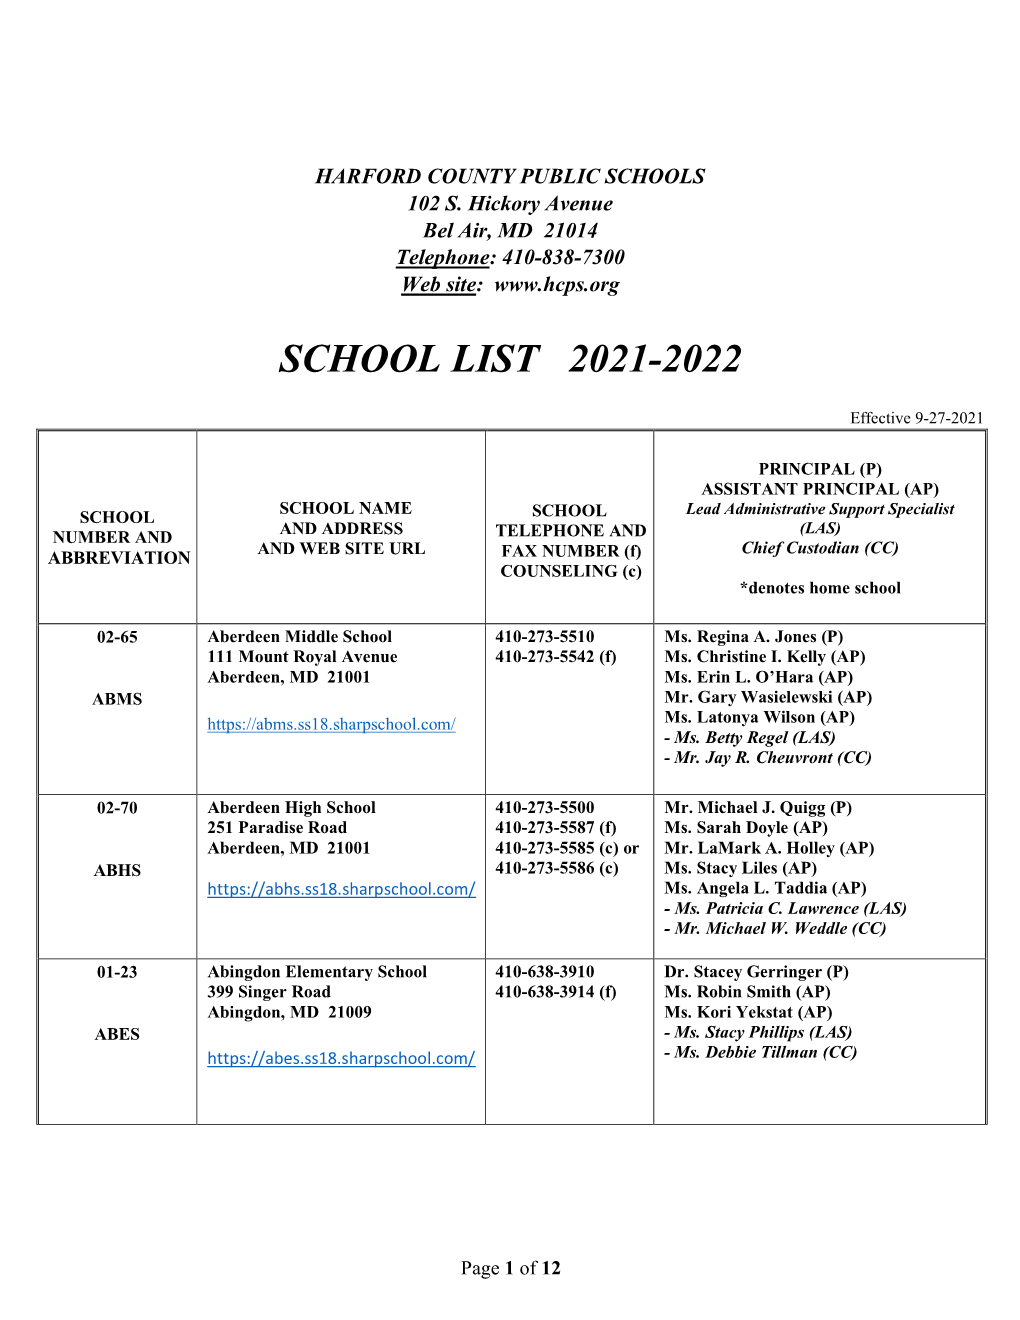 School List 2021-2022